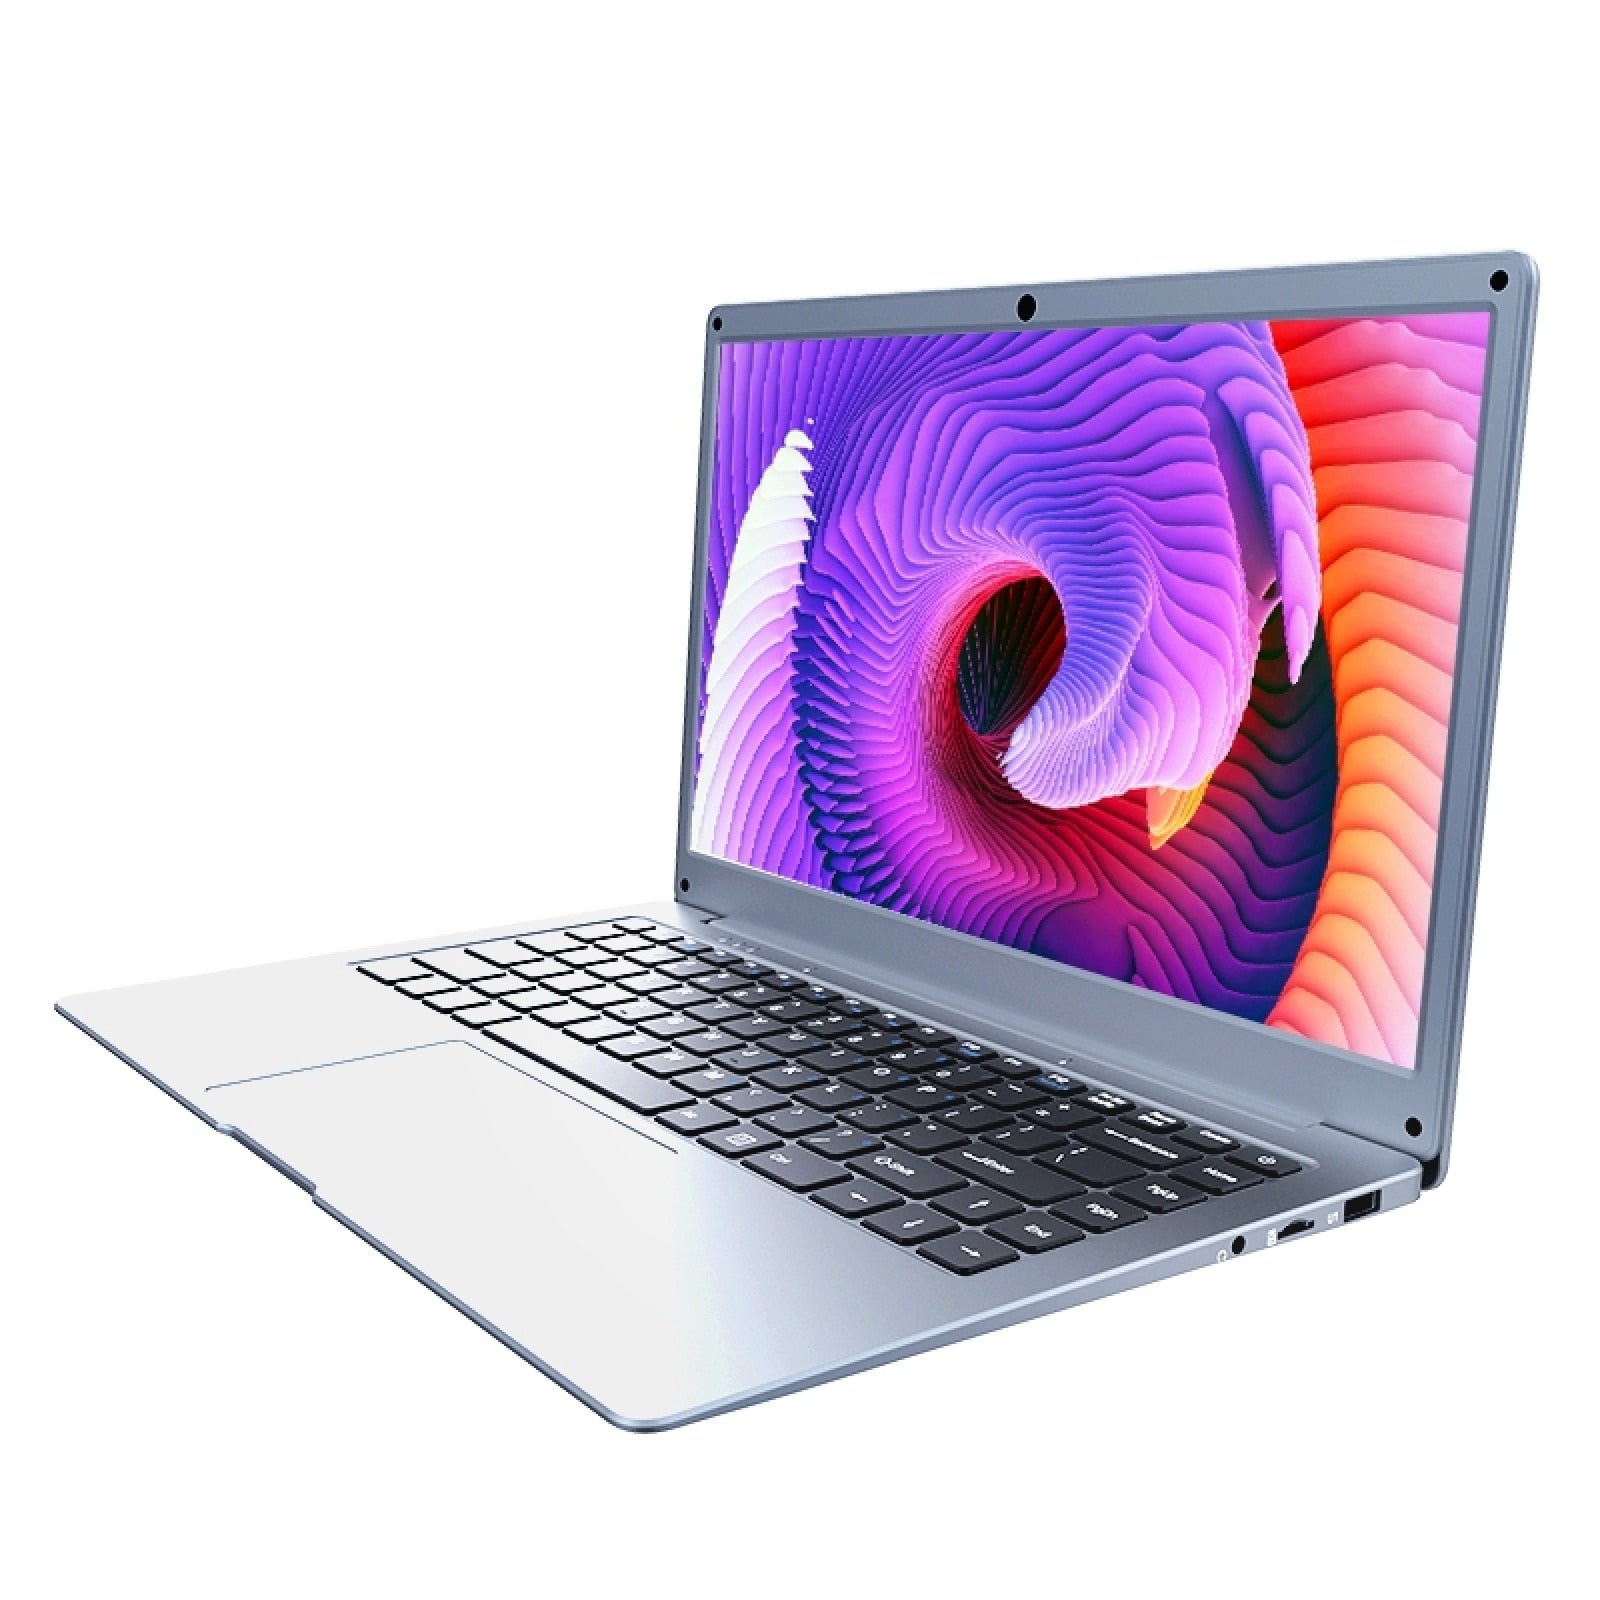 Jumper EZbook S5 Laptop 14.0 inch 4GB RAM 64GB ROM Windows 10 Intel N3350/ Z8350/ Z8300 Notebook Dual WiFi 1920x1080 4600mAh PC